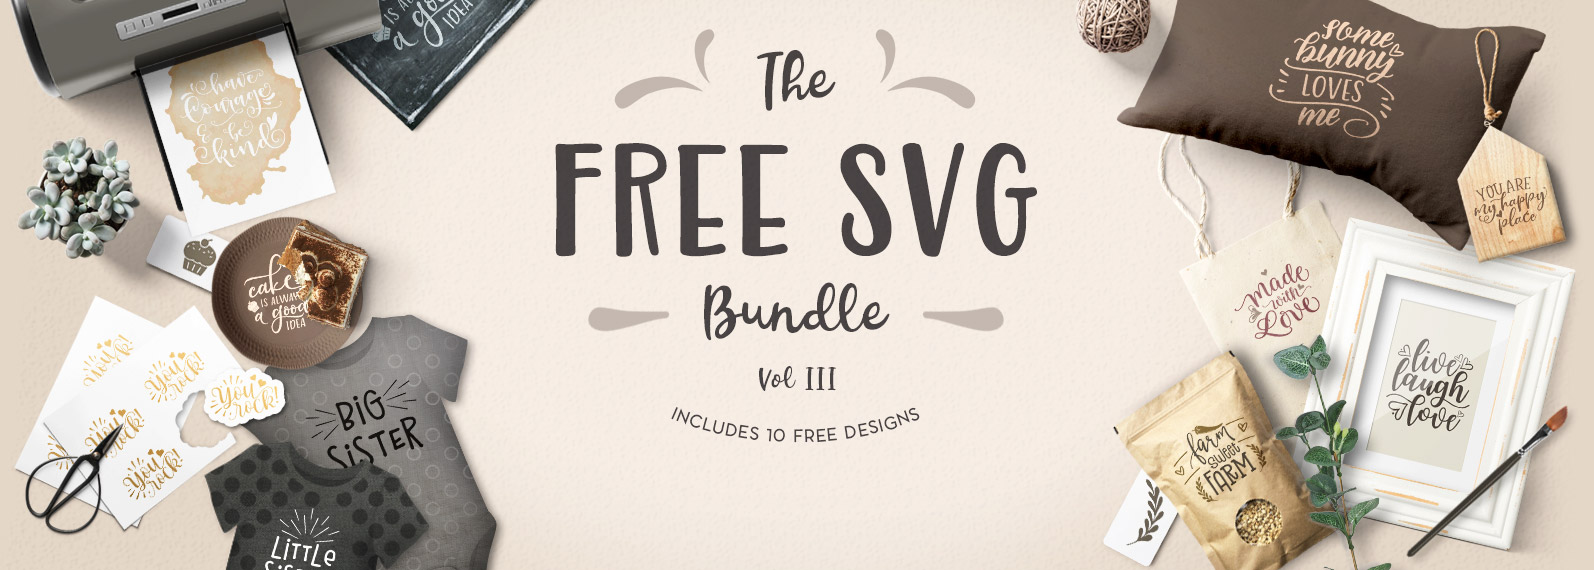 The Free Svg Bundle Volume Iii Design Bundles